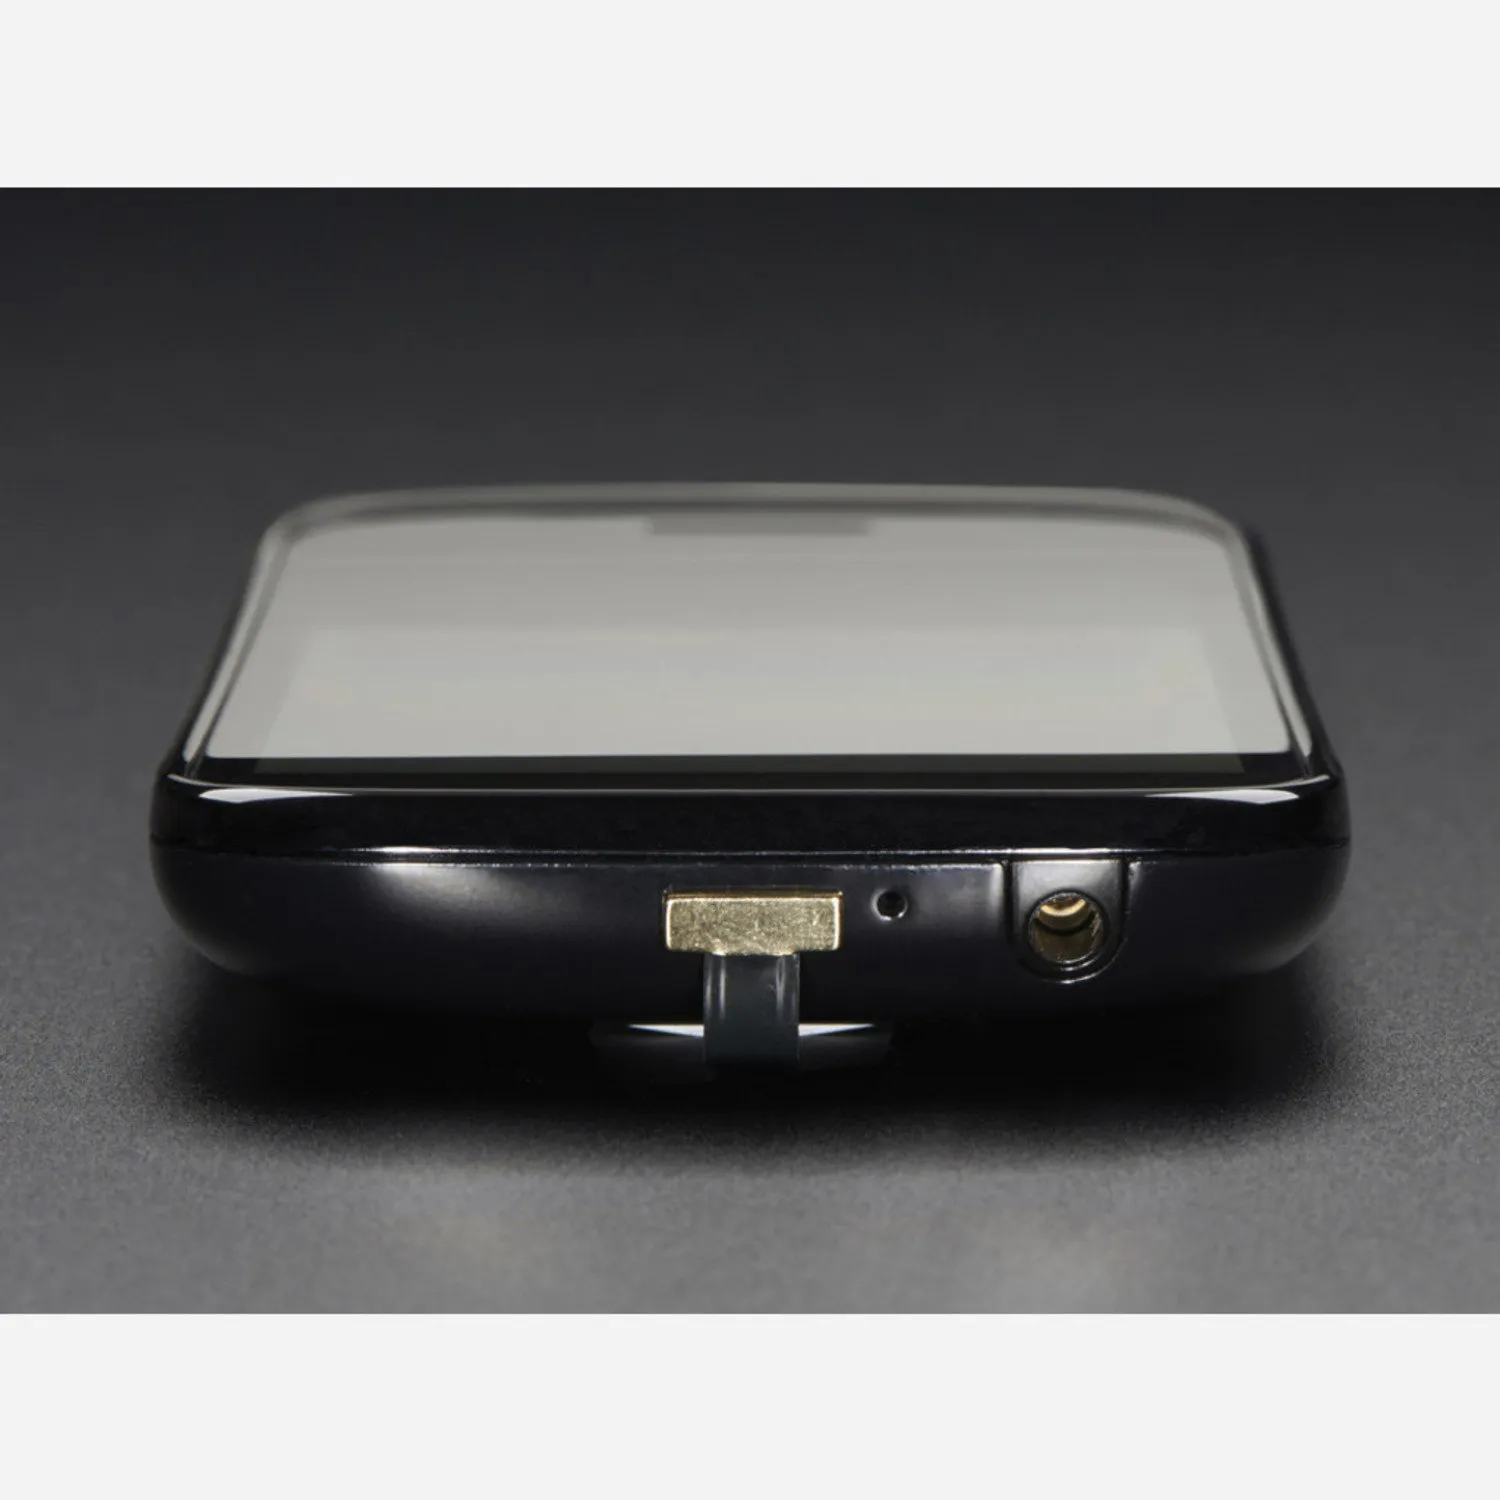 Photo of Universal Qi Wireless Charging Module - 40mm Reverse MicroUSB